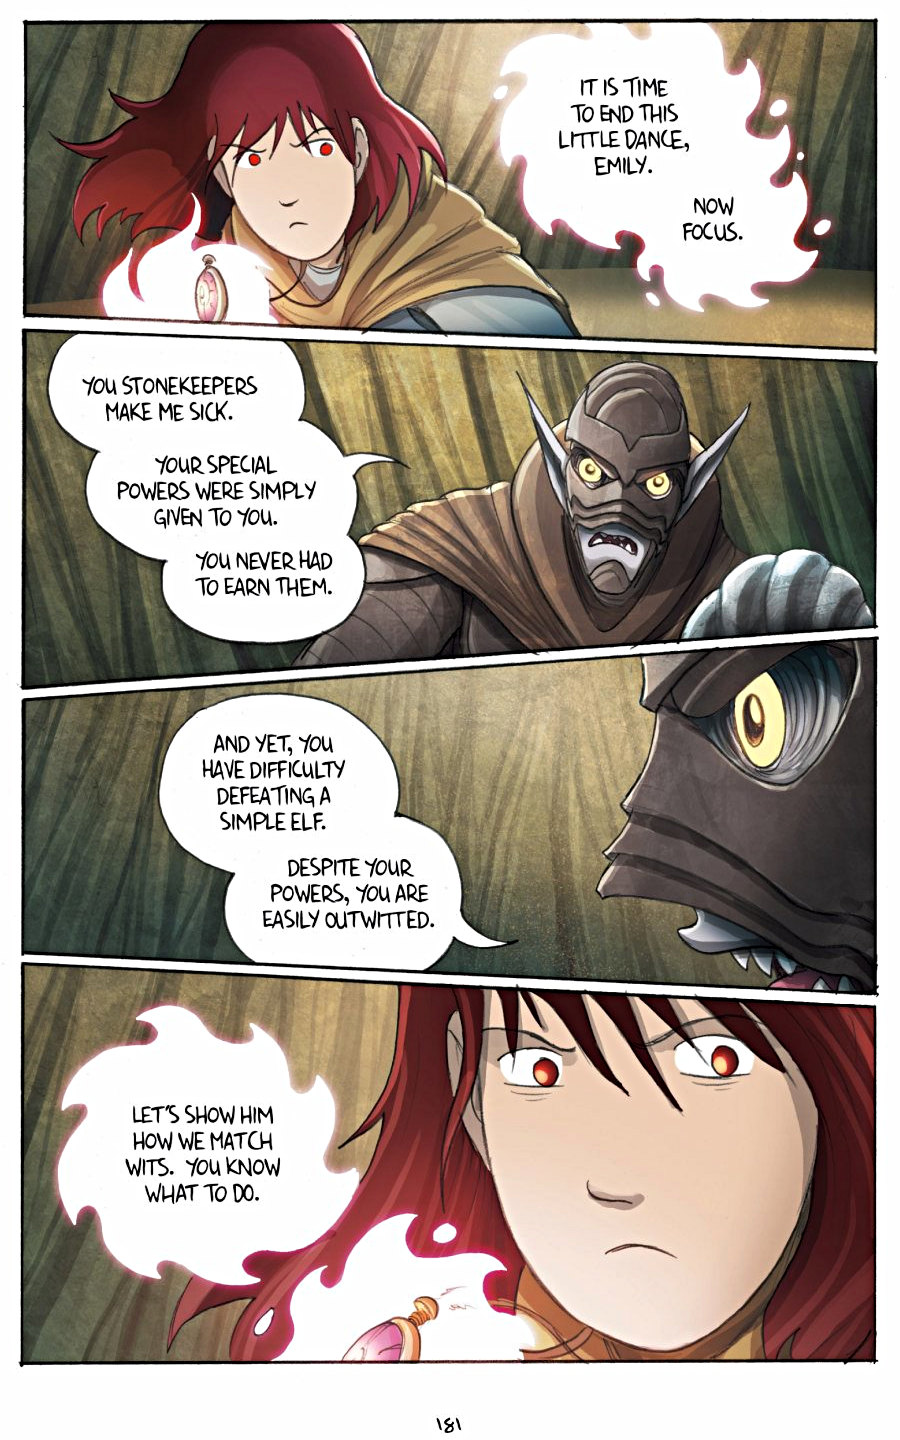 page 181 of amulet 3 cloud searchers graphic novel by kazu kibuishi